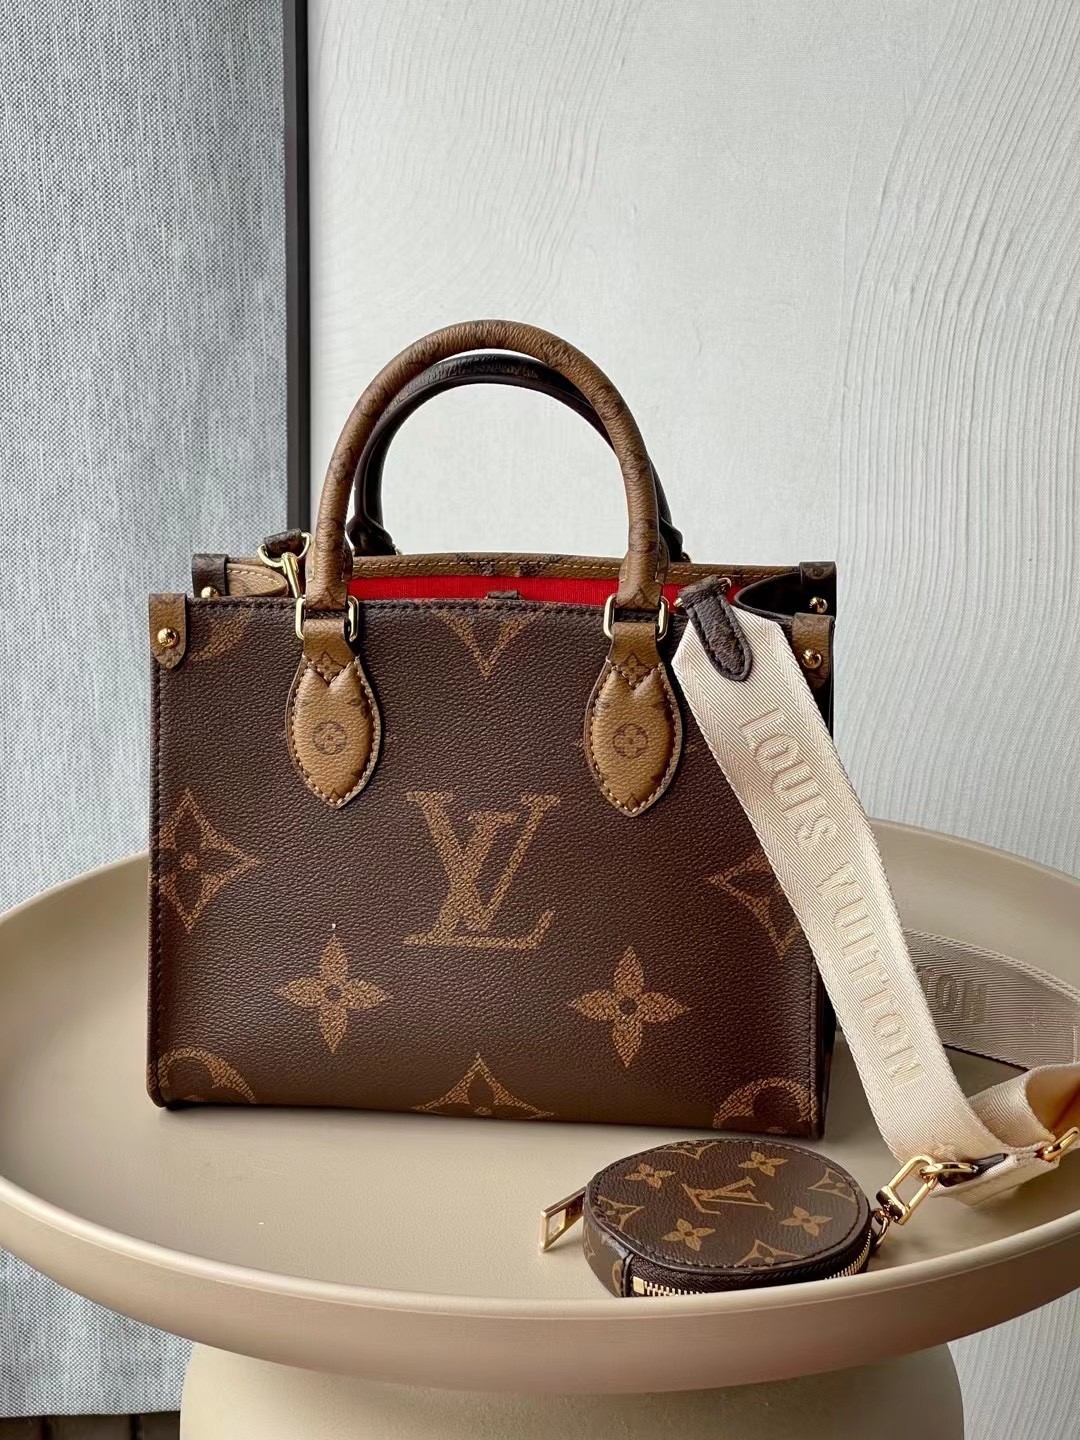 Video: Shebag best seller of Louis Vuitton bags in 2023 (2023 Week 50)-بہترین معیار کا جعلی لوئس ووٹن بیگ آن لائن اسٹور، ریپلیکا ڈیزائنر بیگ آر یو